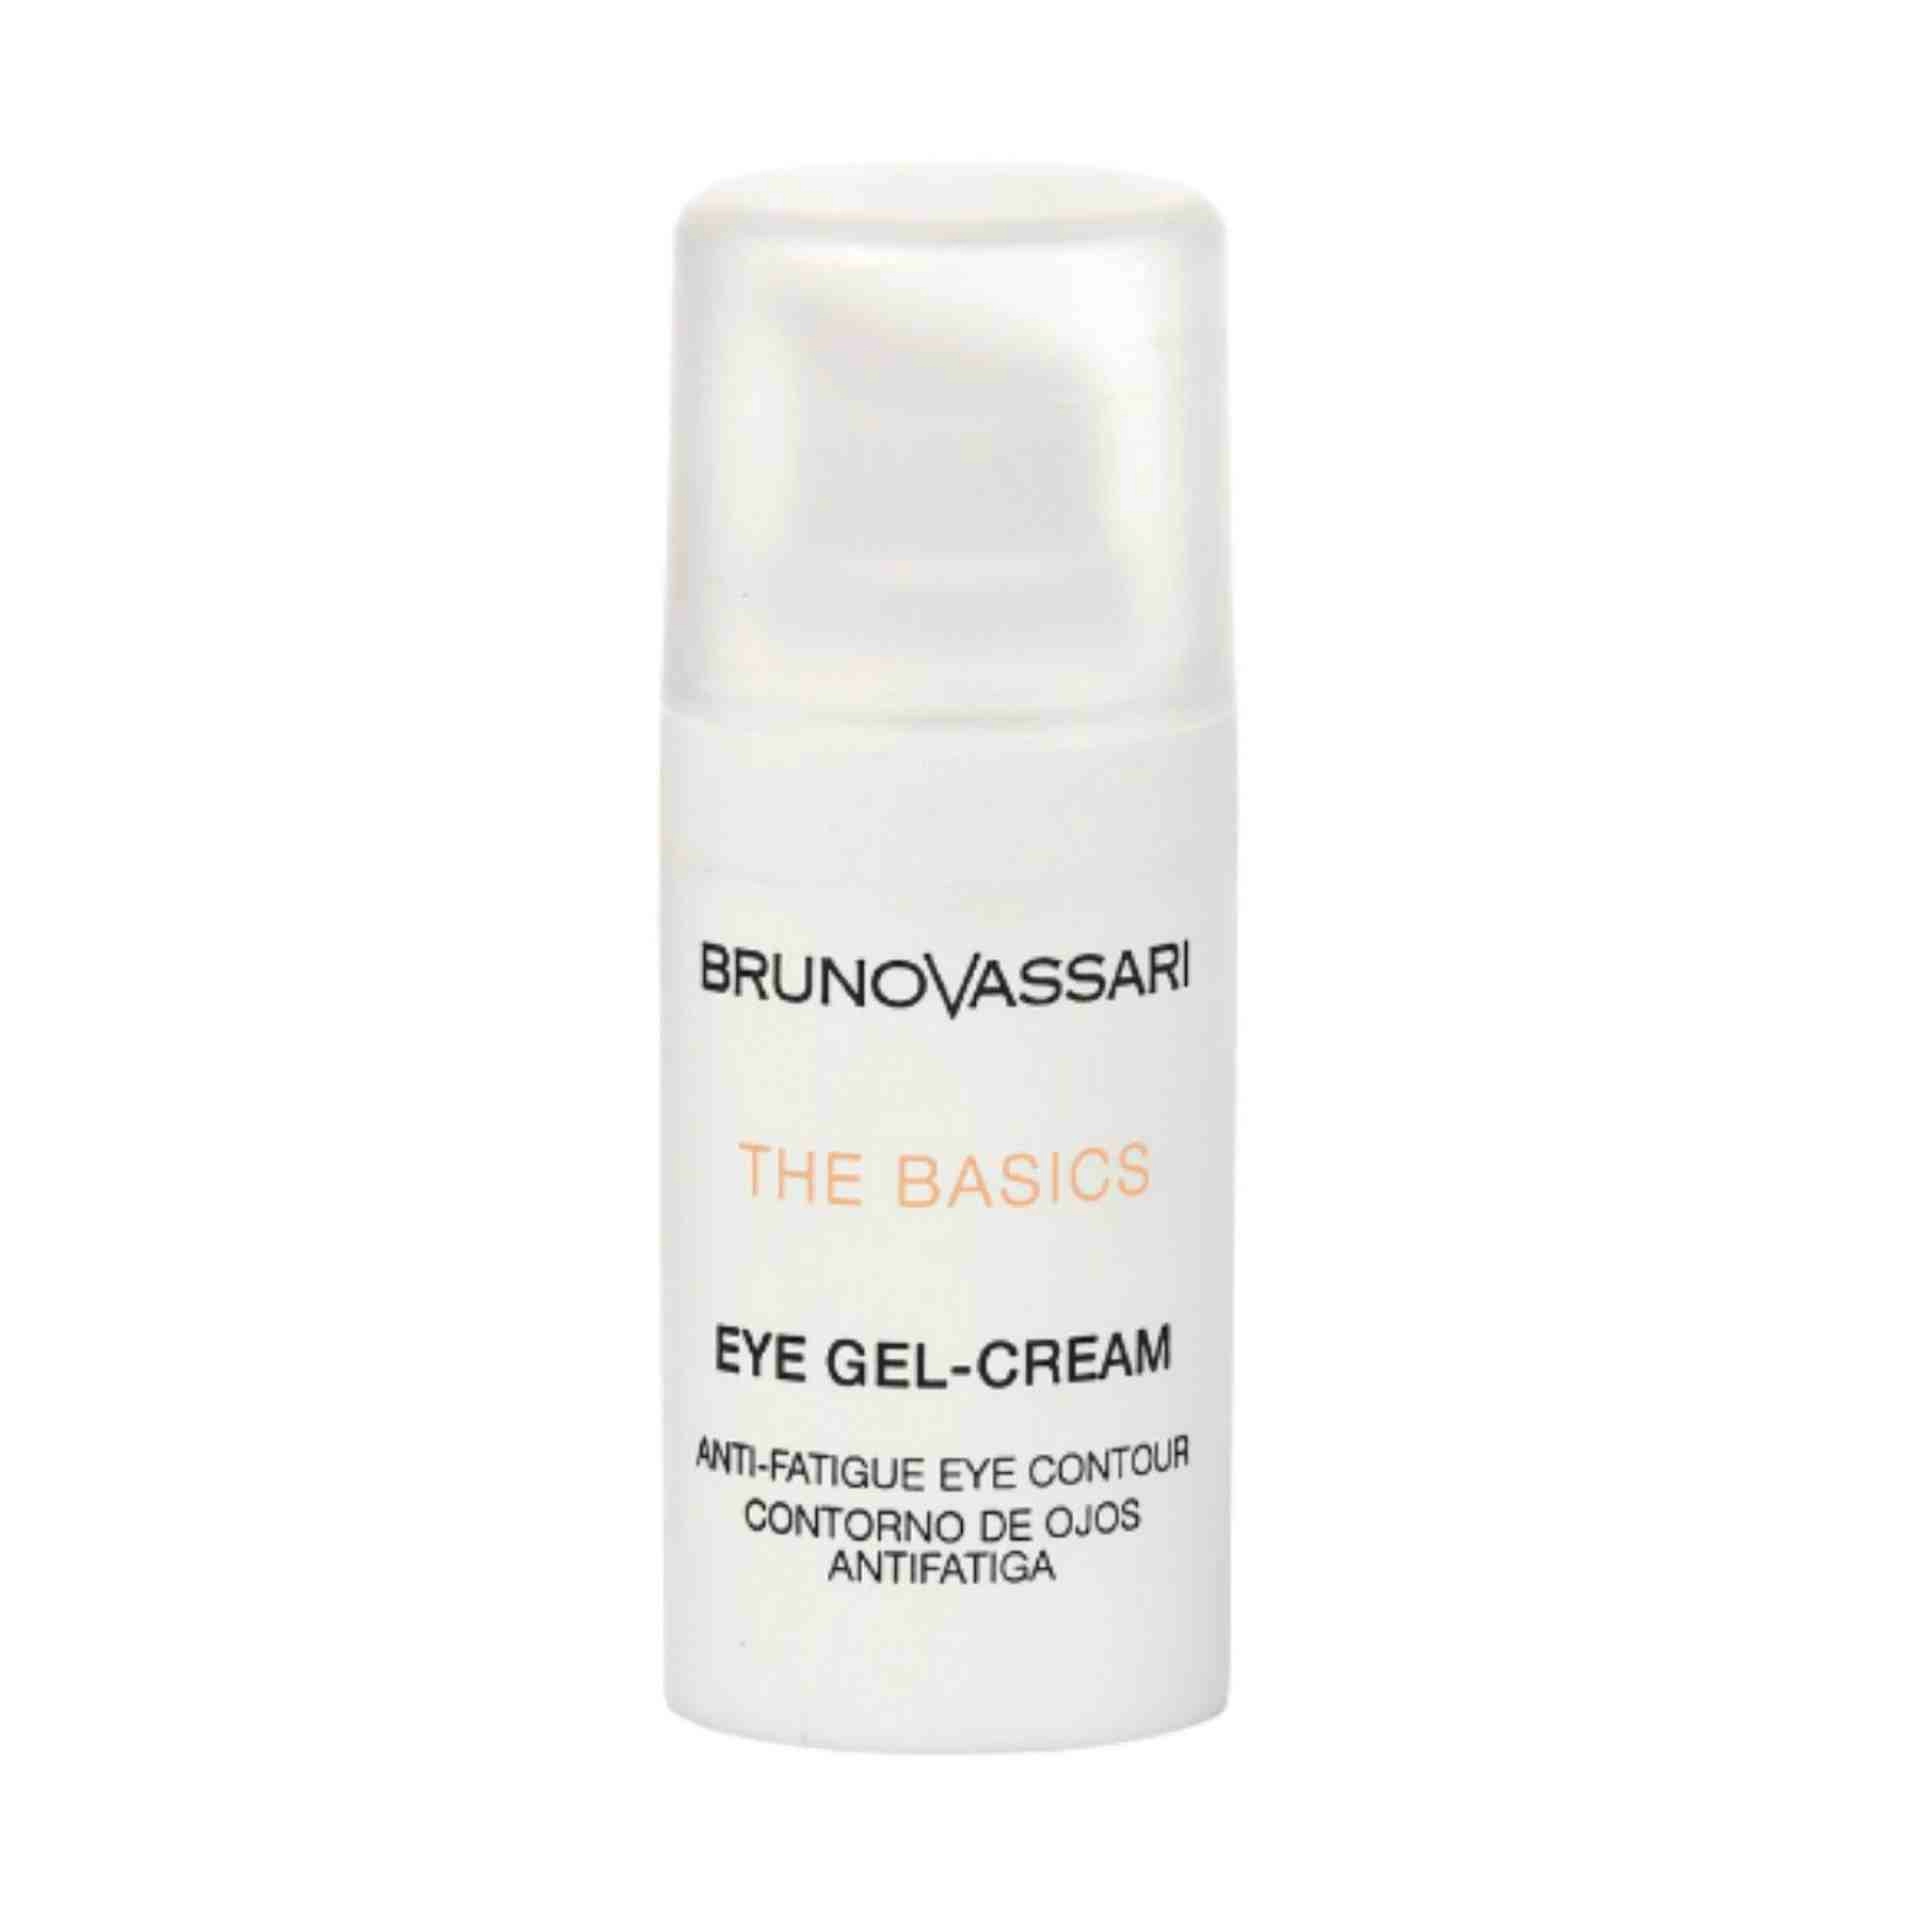 Eye Gel-Cream | Contorno de ojos 15ml - The Basics - Bruno Vassari ®